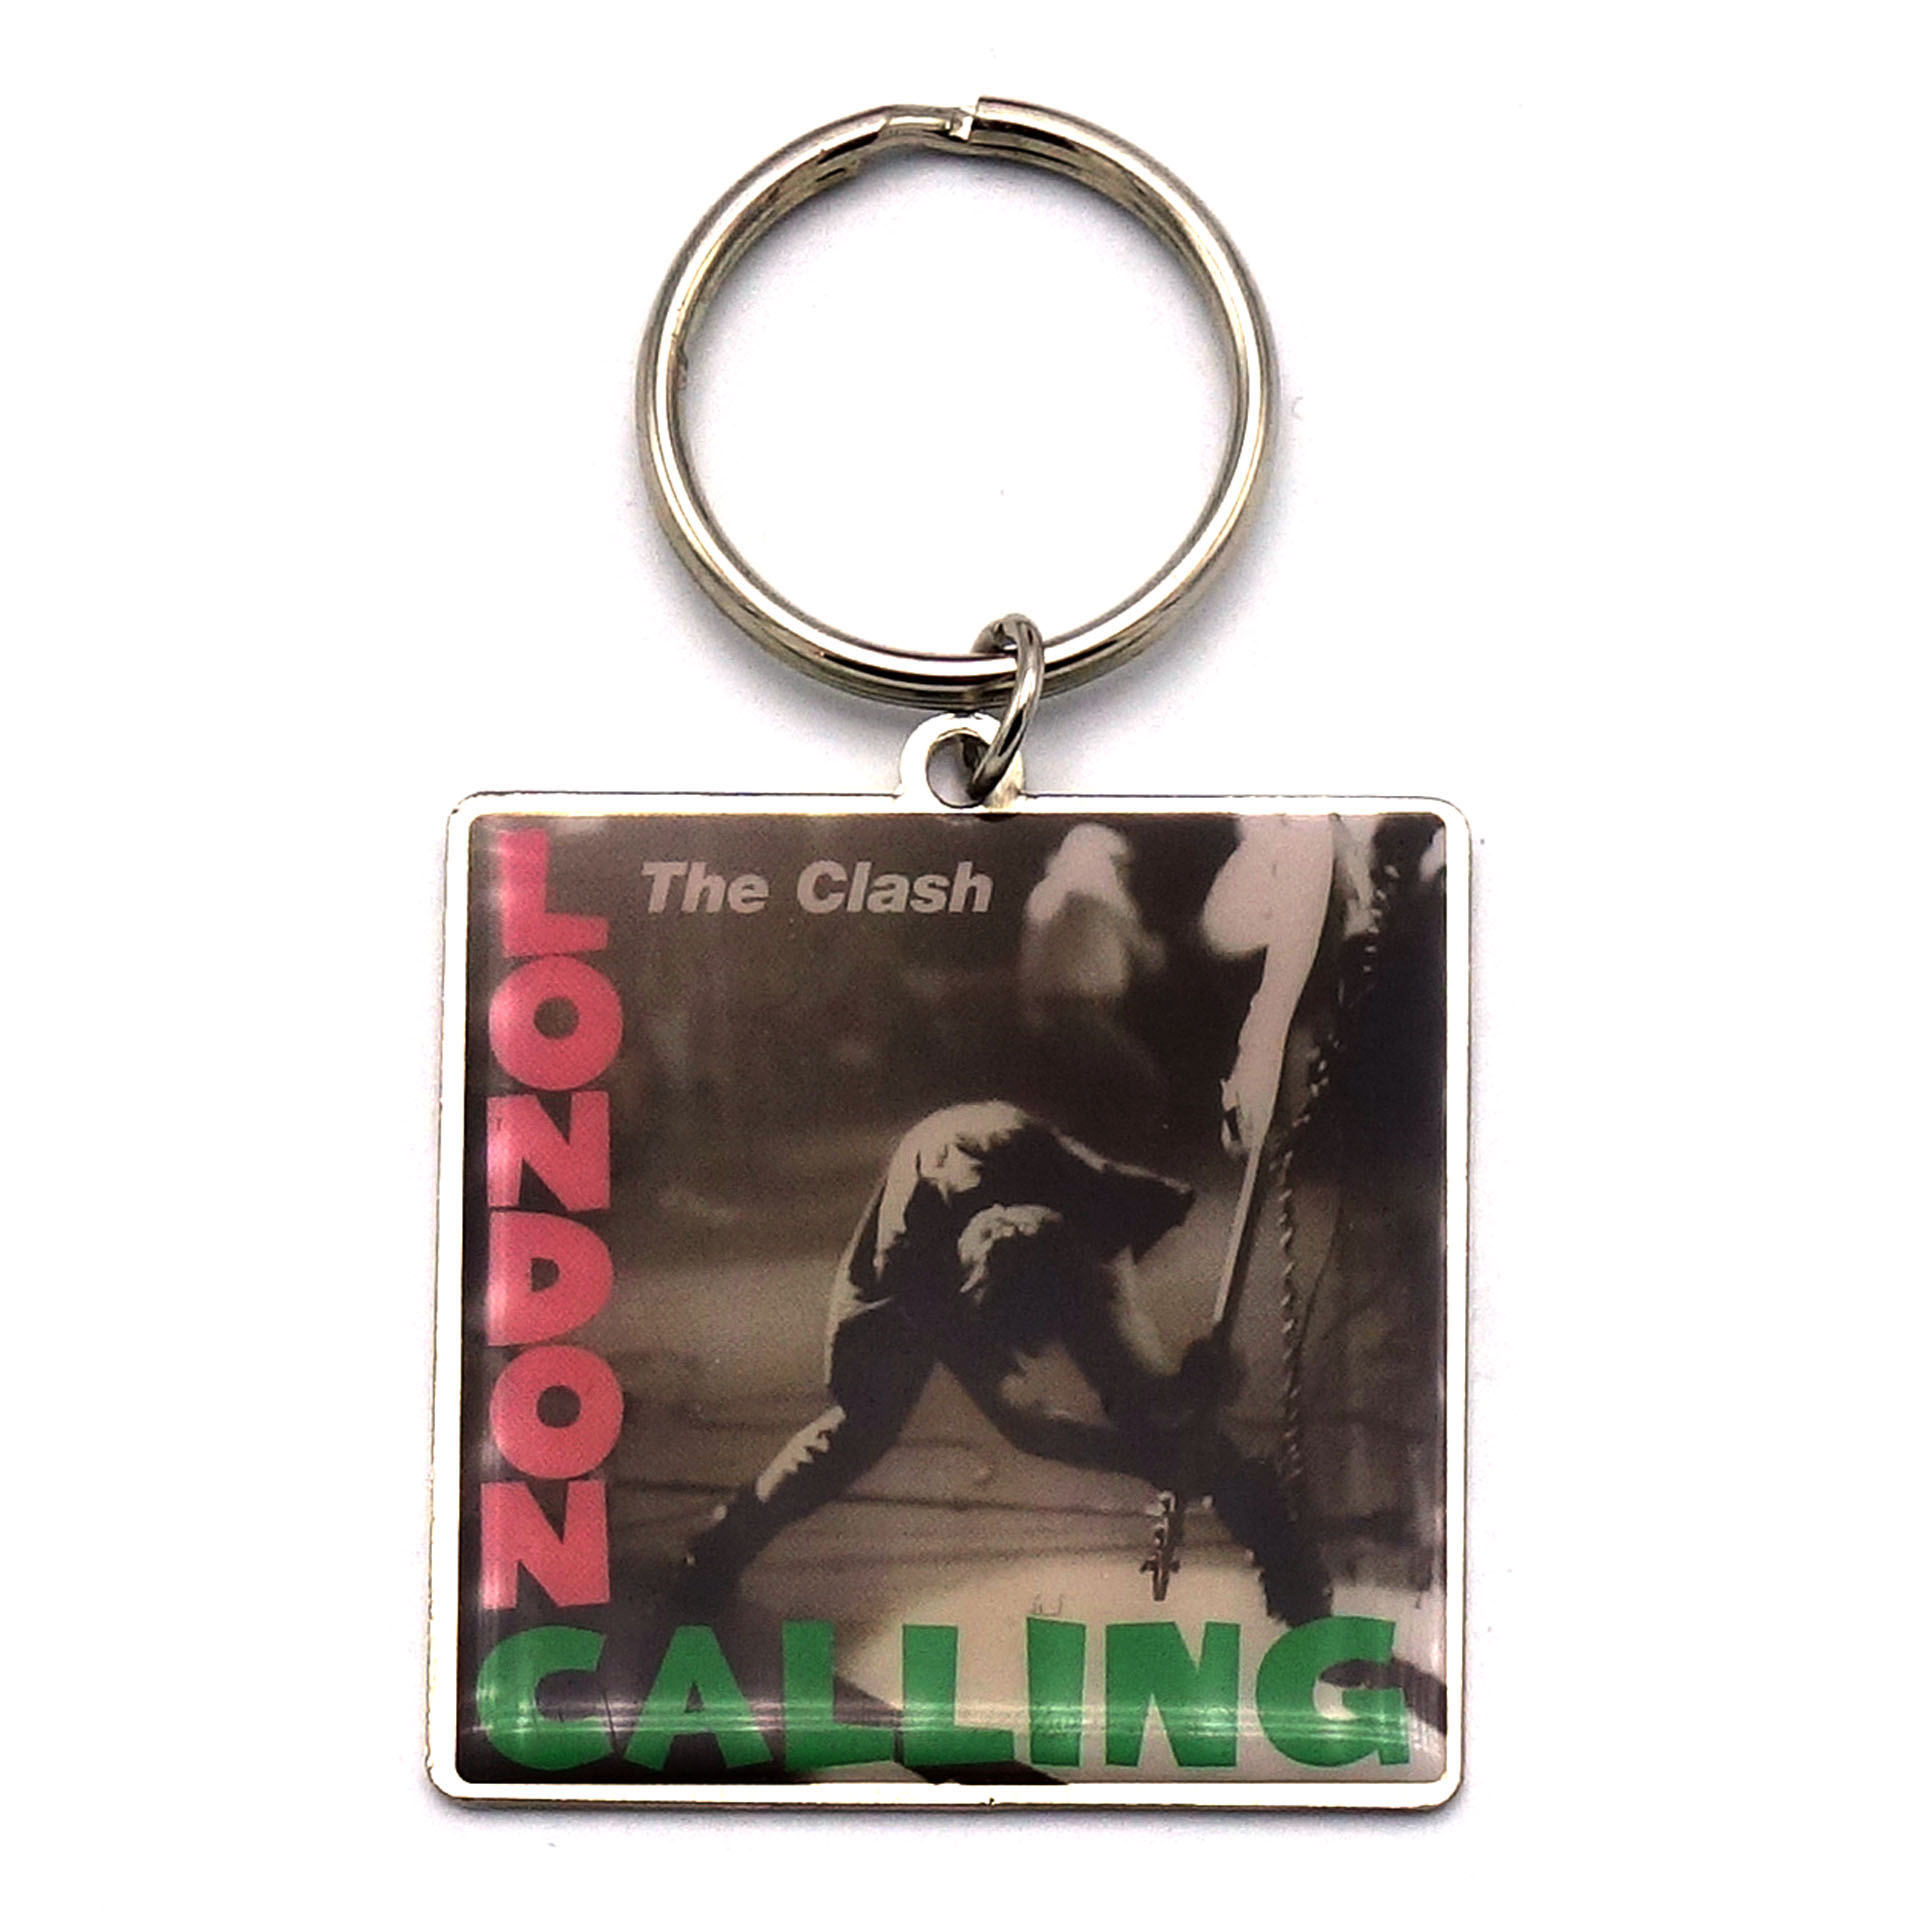 The Clash "London Calling" Schlüsselanhänger